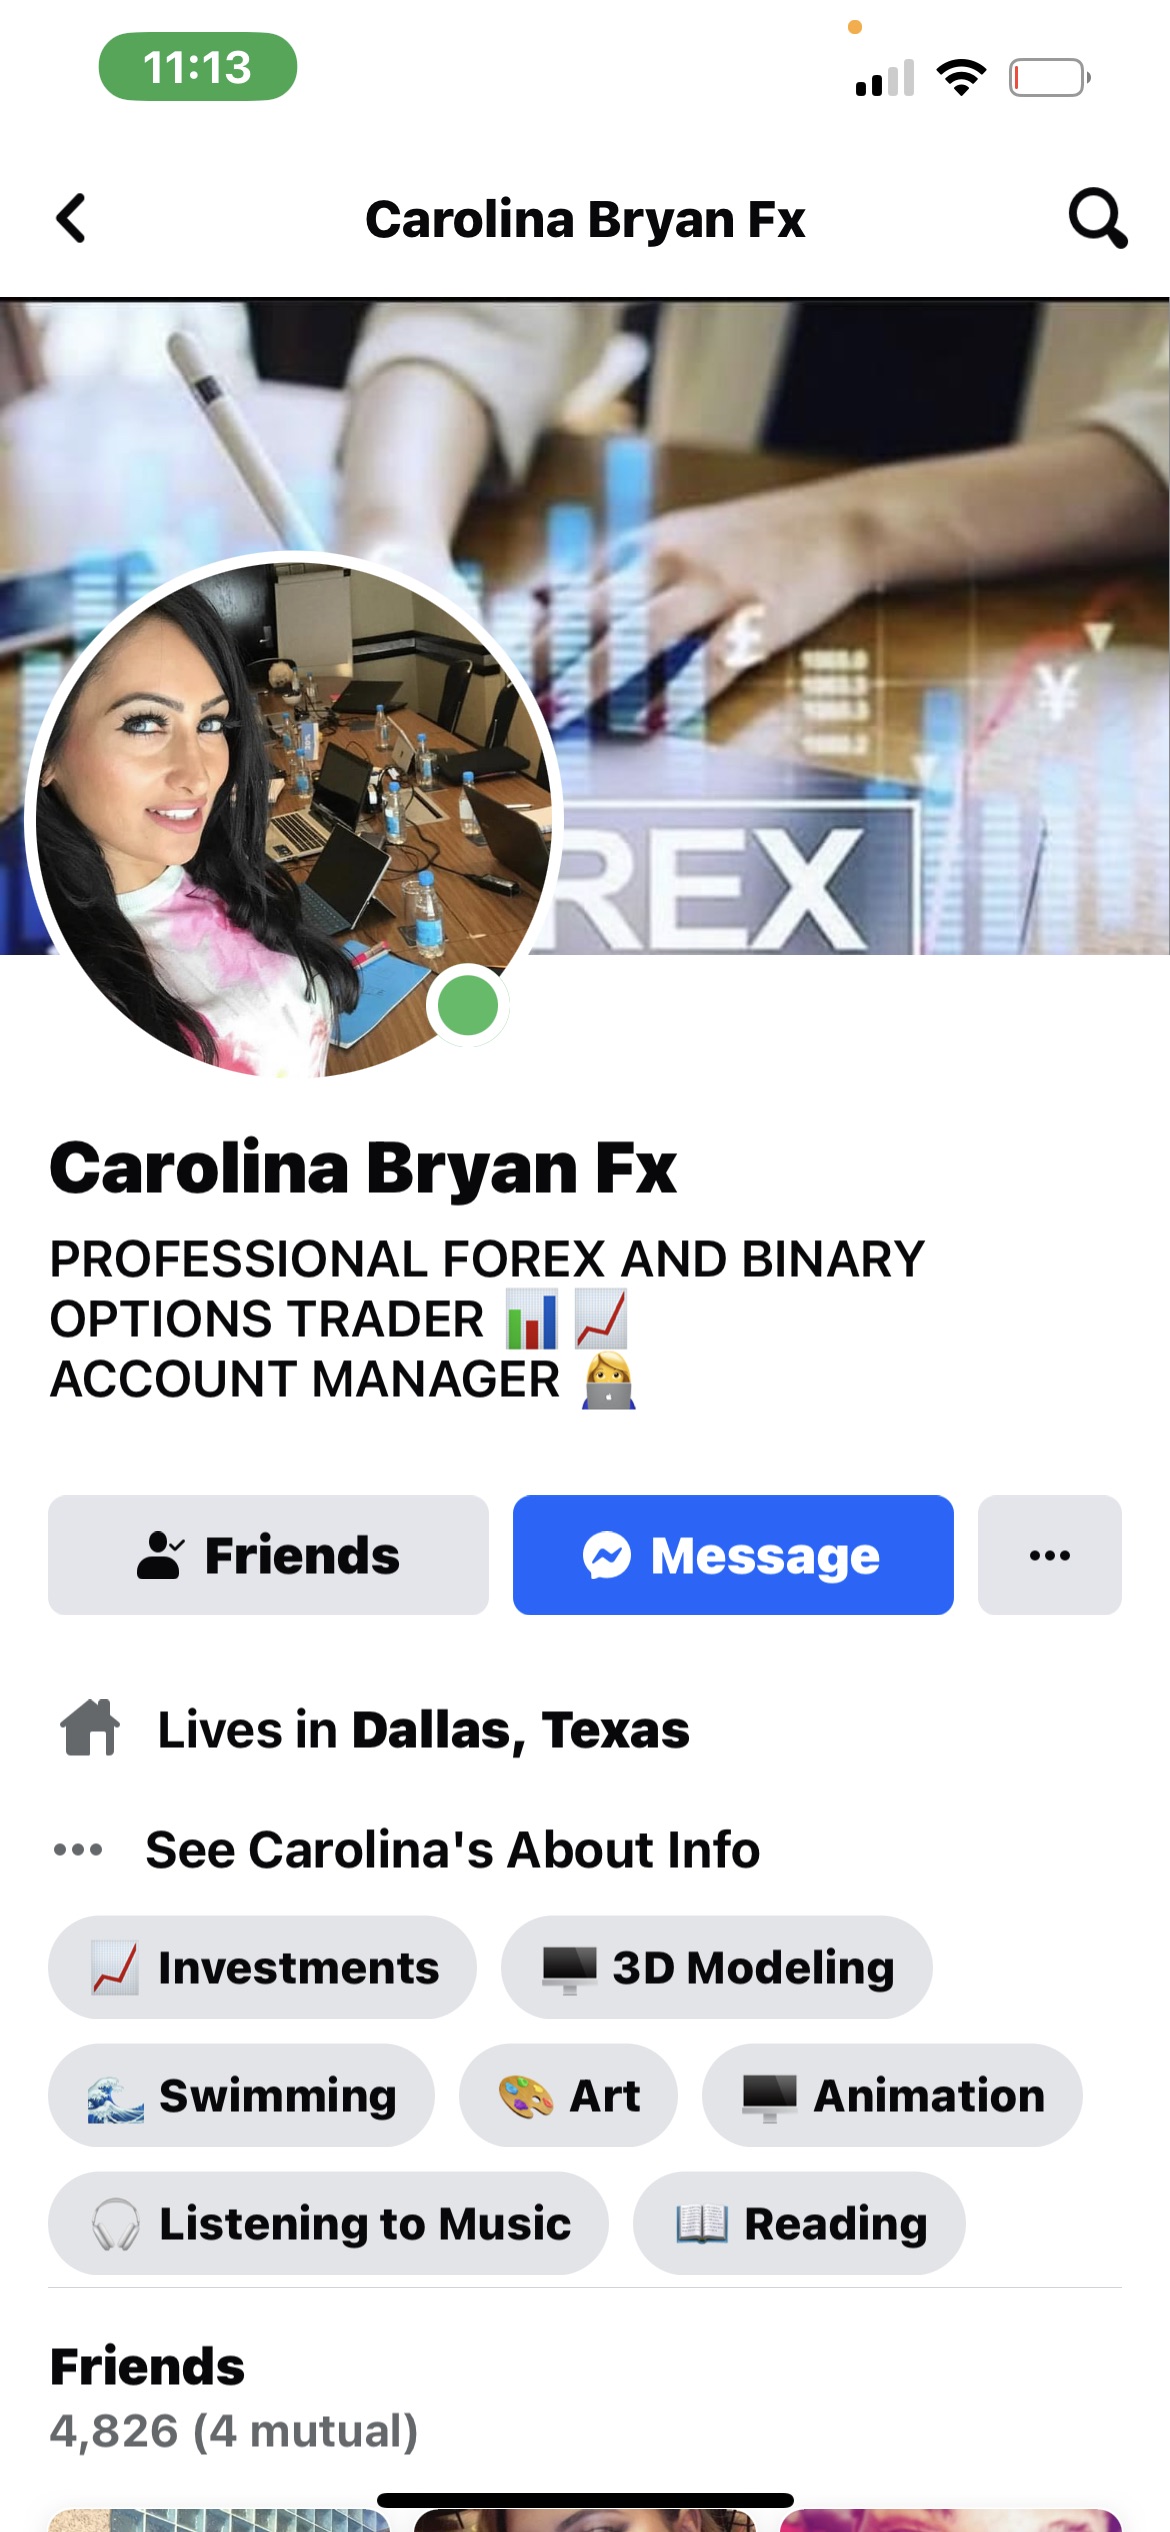 Carolina Bryan’s  Facebook page